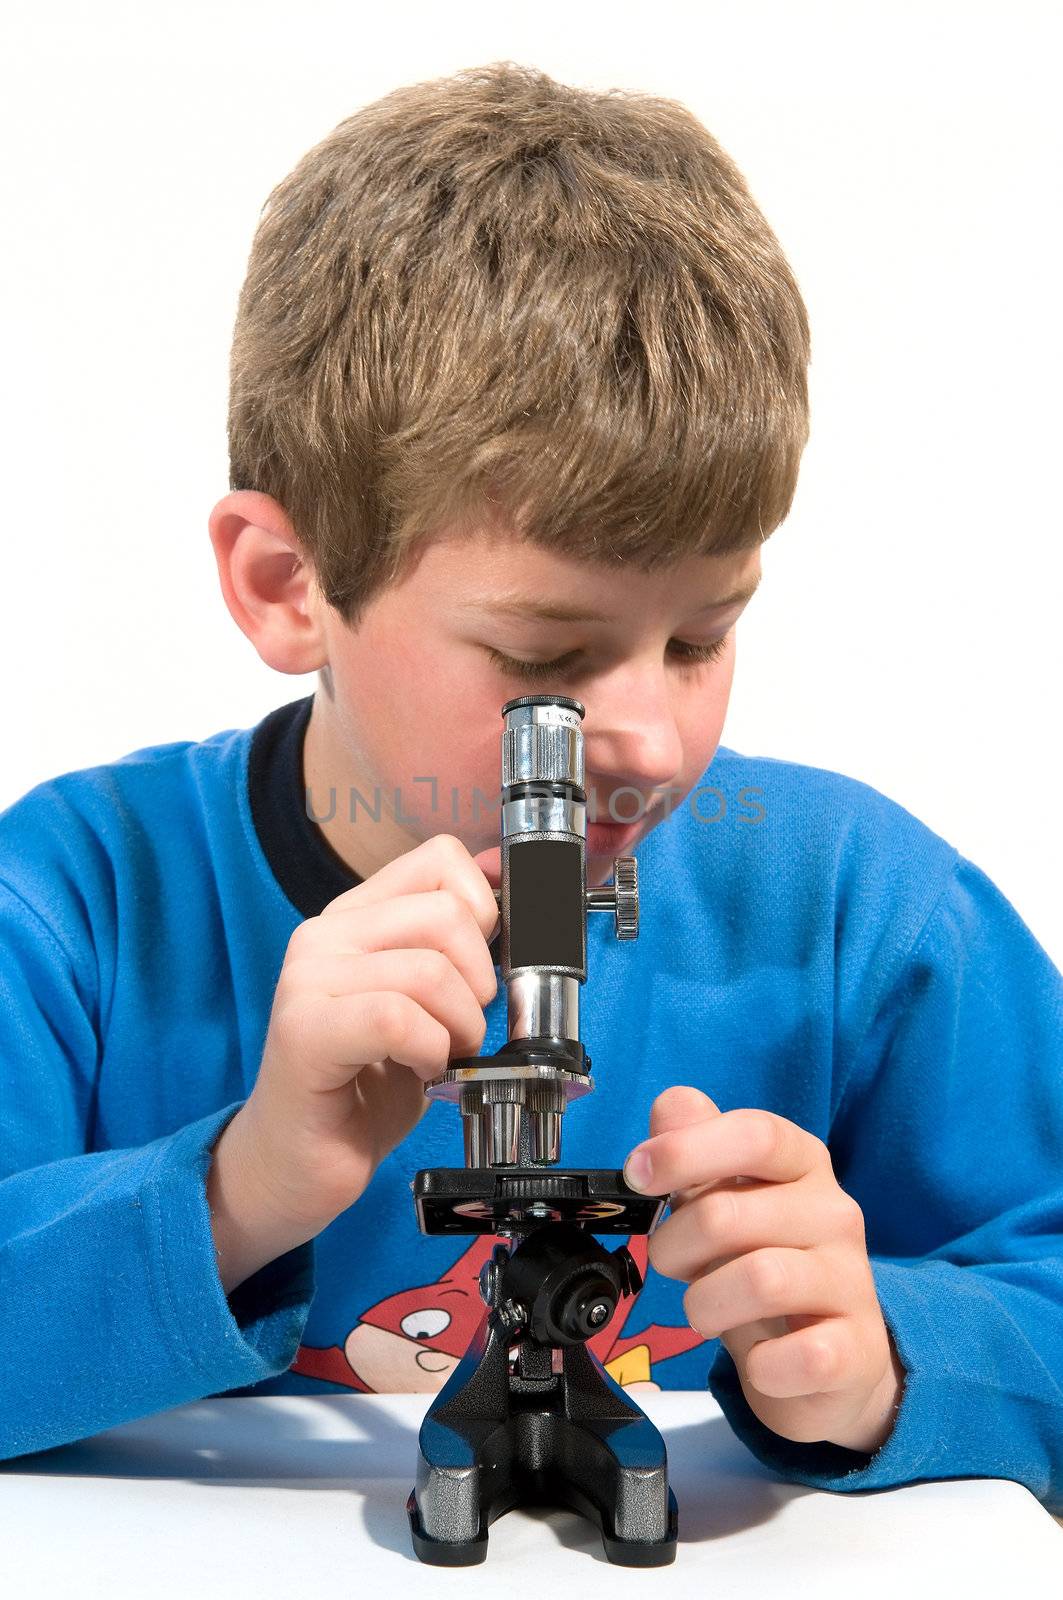 
	
Boy Learning biology considers microscope grain of wheat